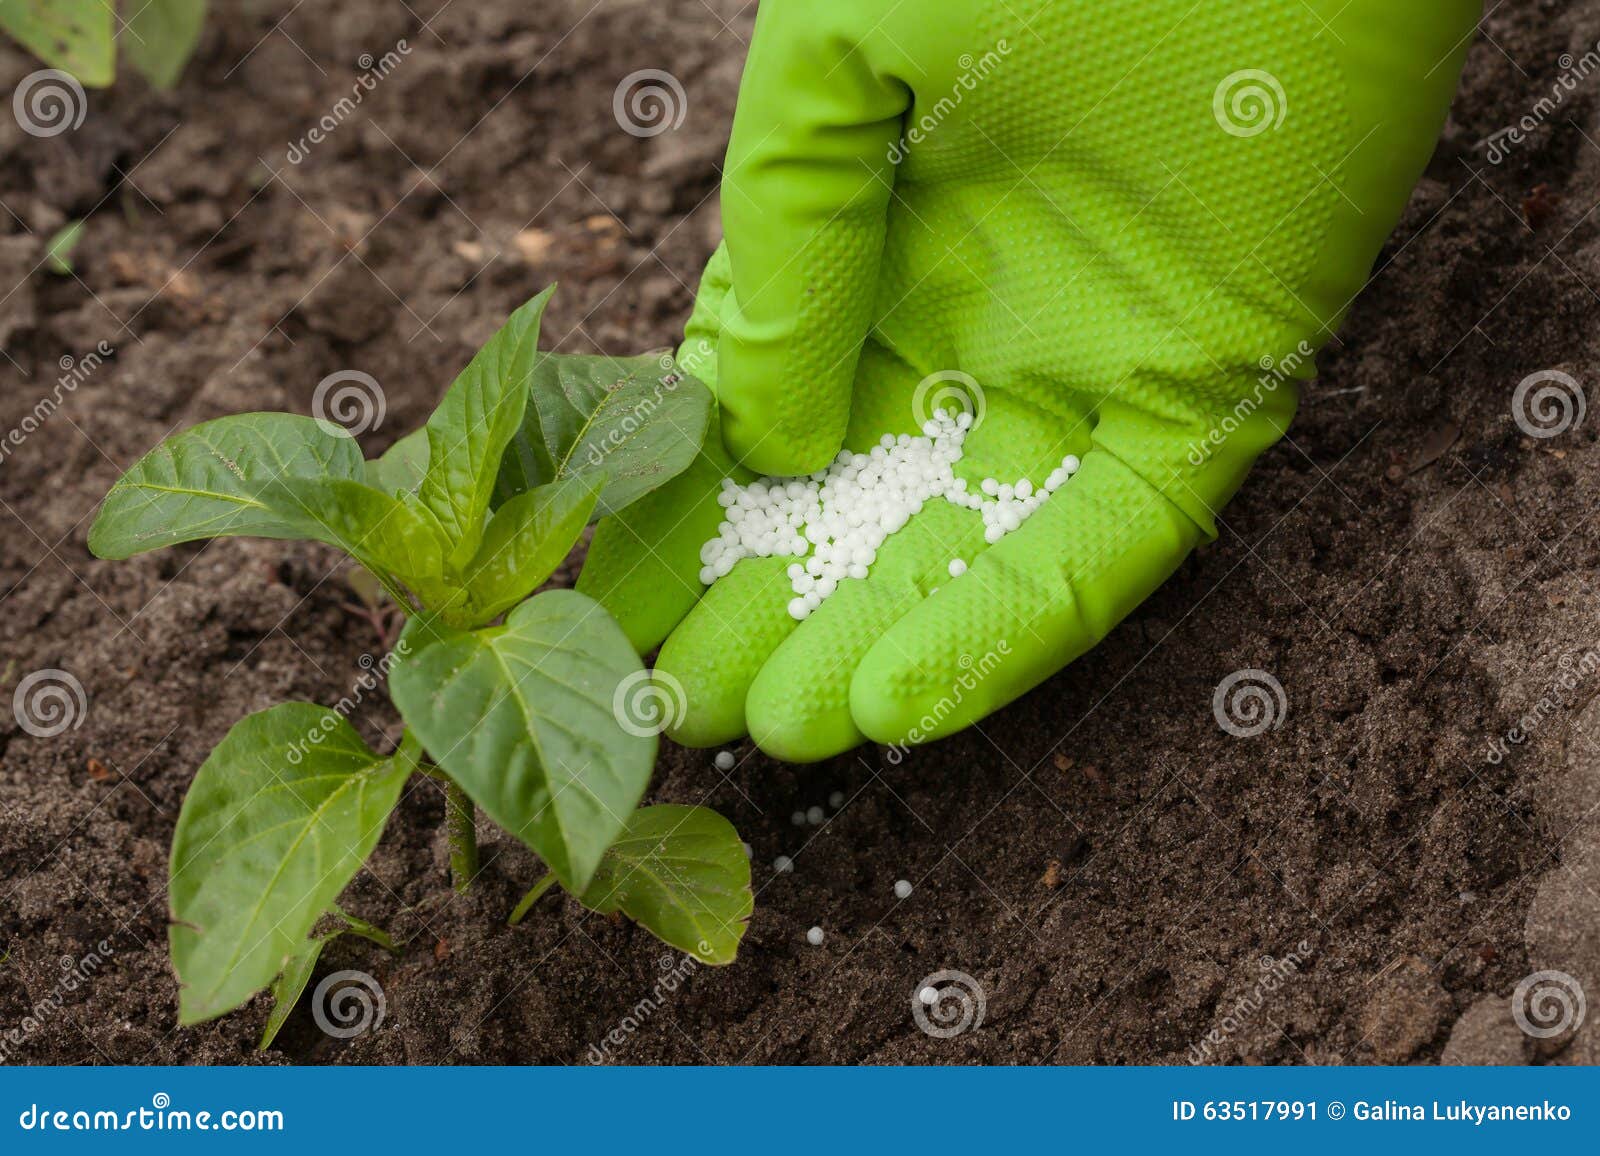 vegetable fertilizer